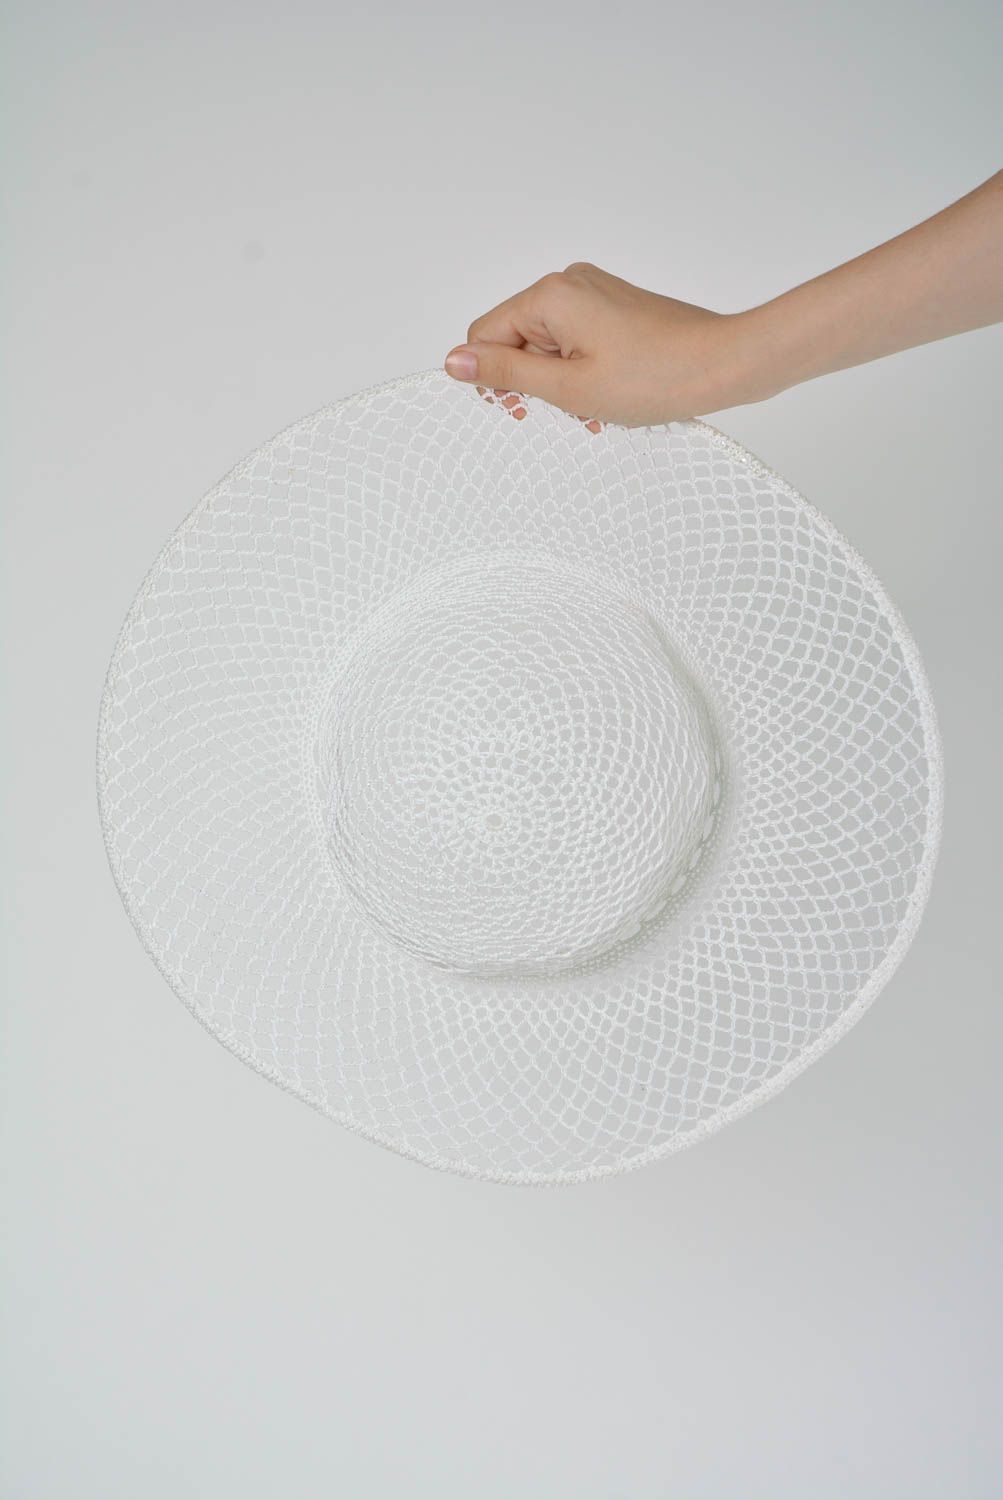 Viscose crocheted hat delicate white summer beach handmade openwork accessory photo 2